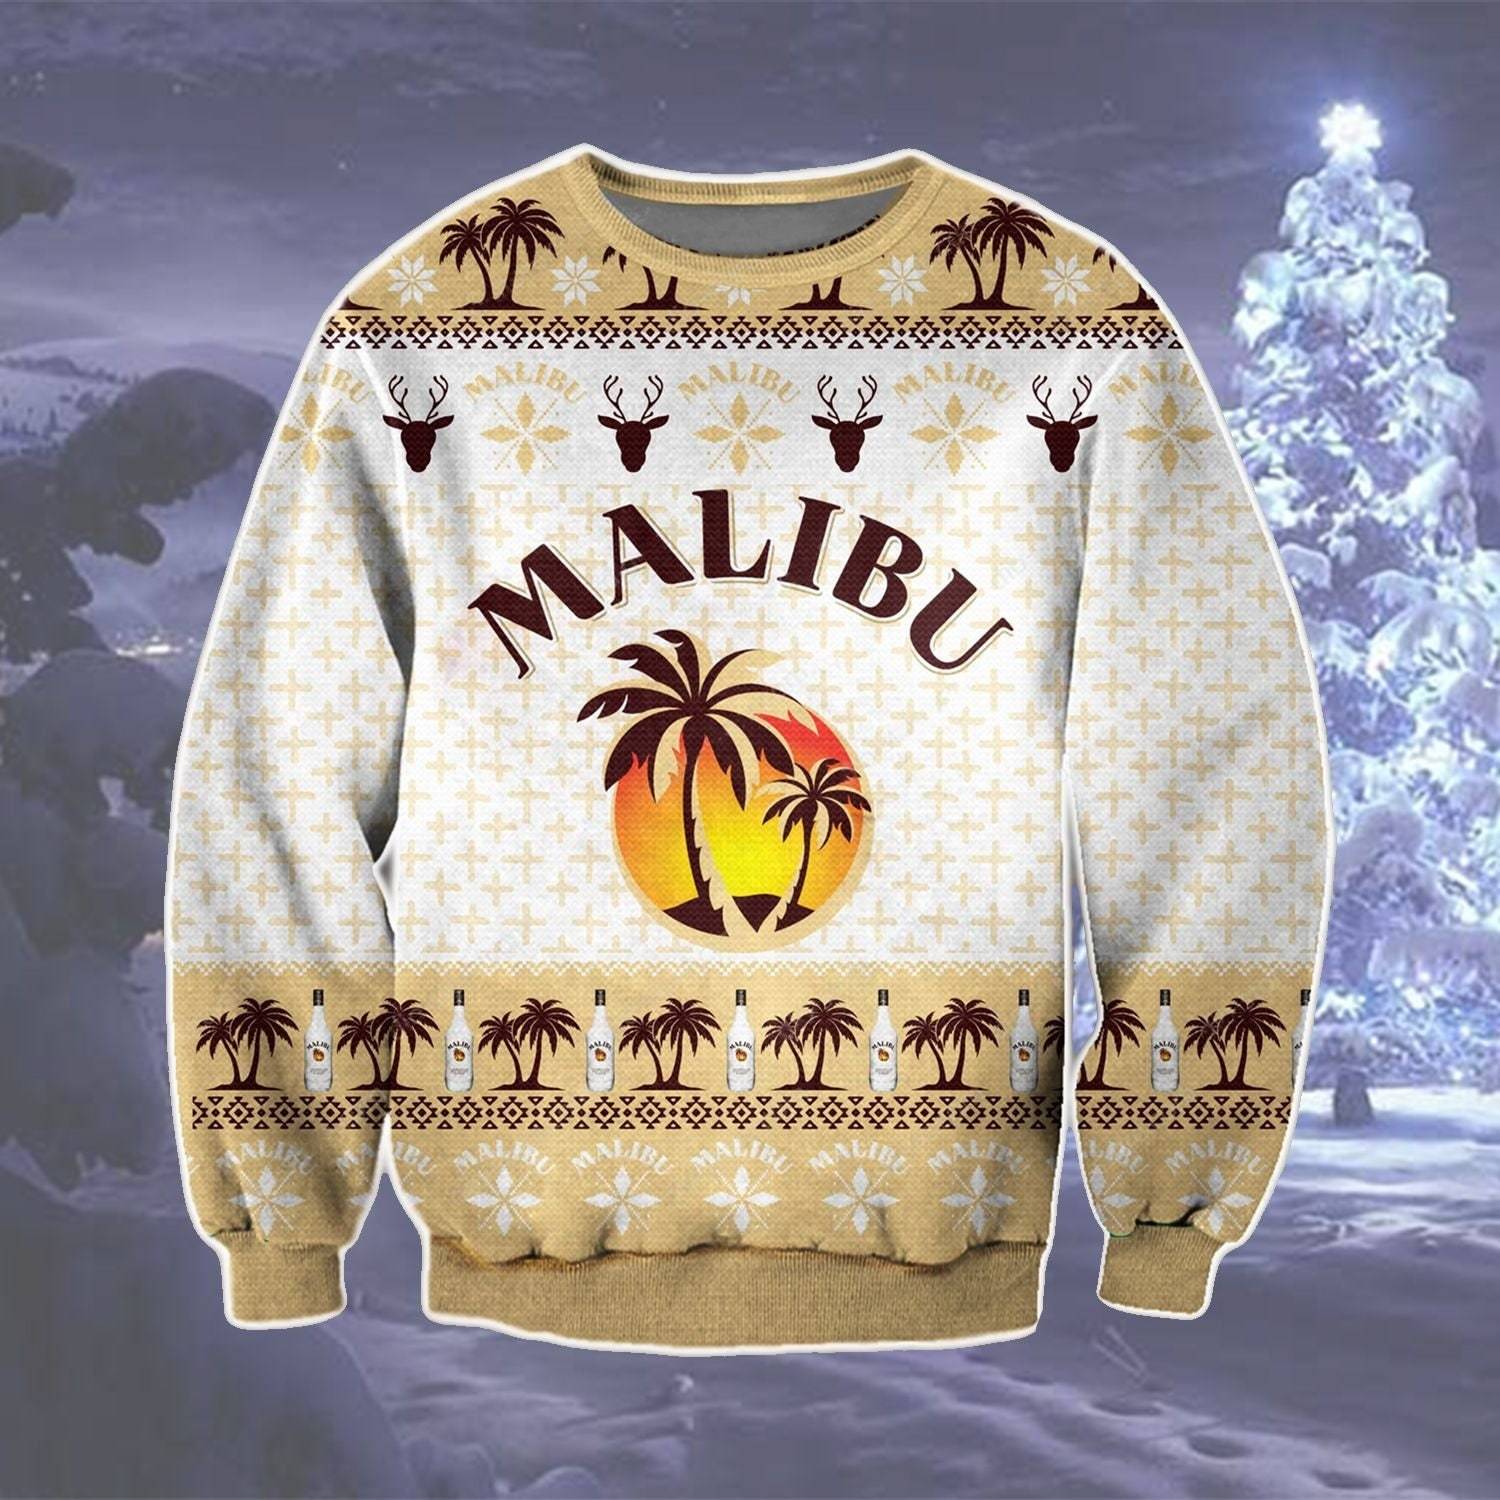 [ BEST ] Malibu ugly christmas sweater – Saleoff 041221